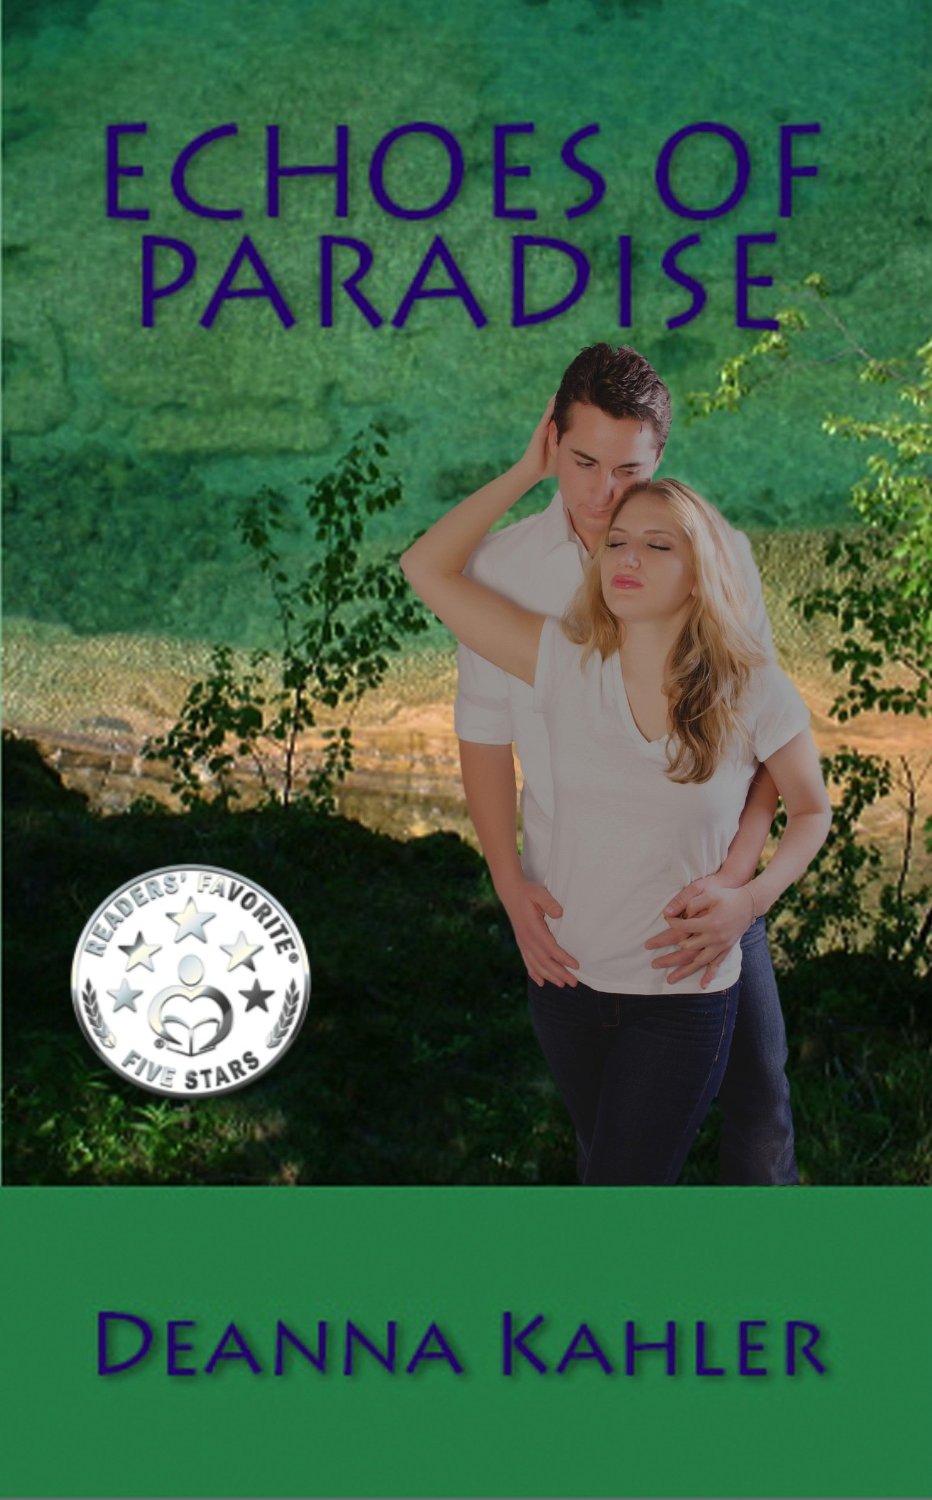 Echoes of Paradise by Deanna Kahler